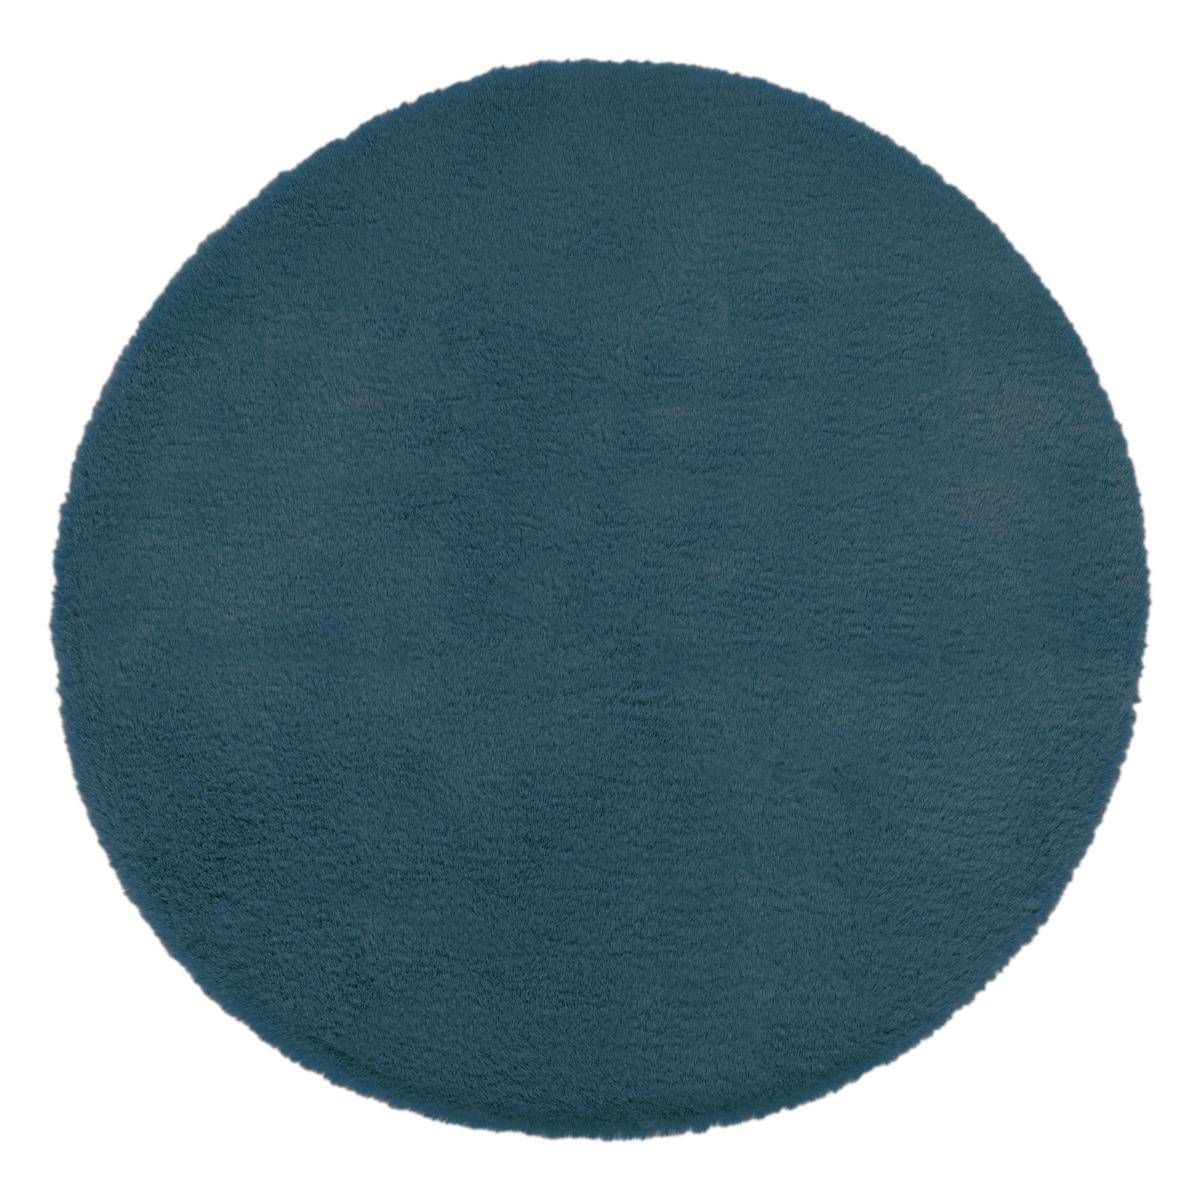 Atmosphera Kulatý koberec, mořská zelená barva, 80 cm - EDAXO.CZ s.r.o.